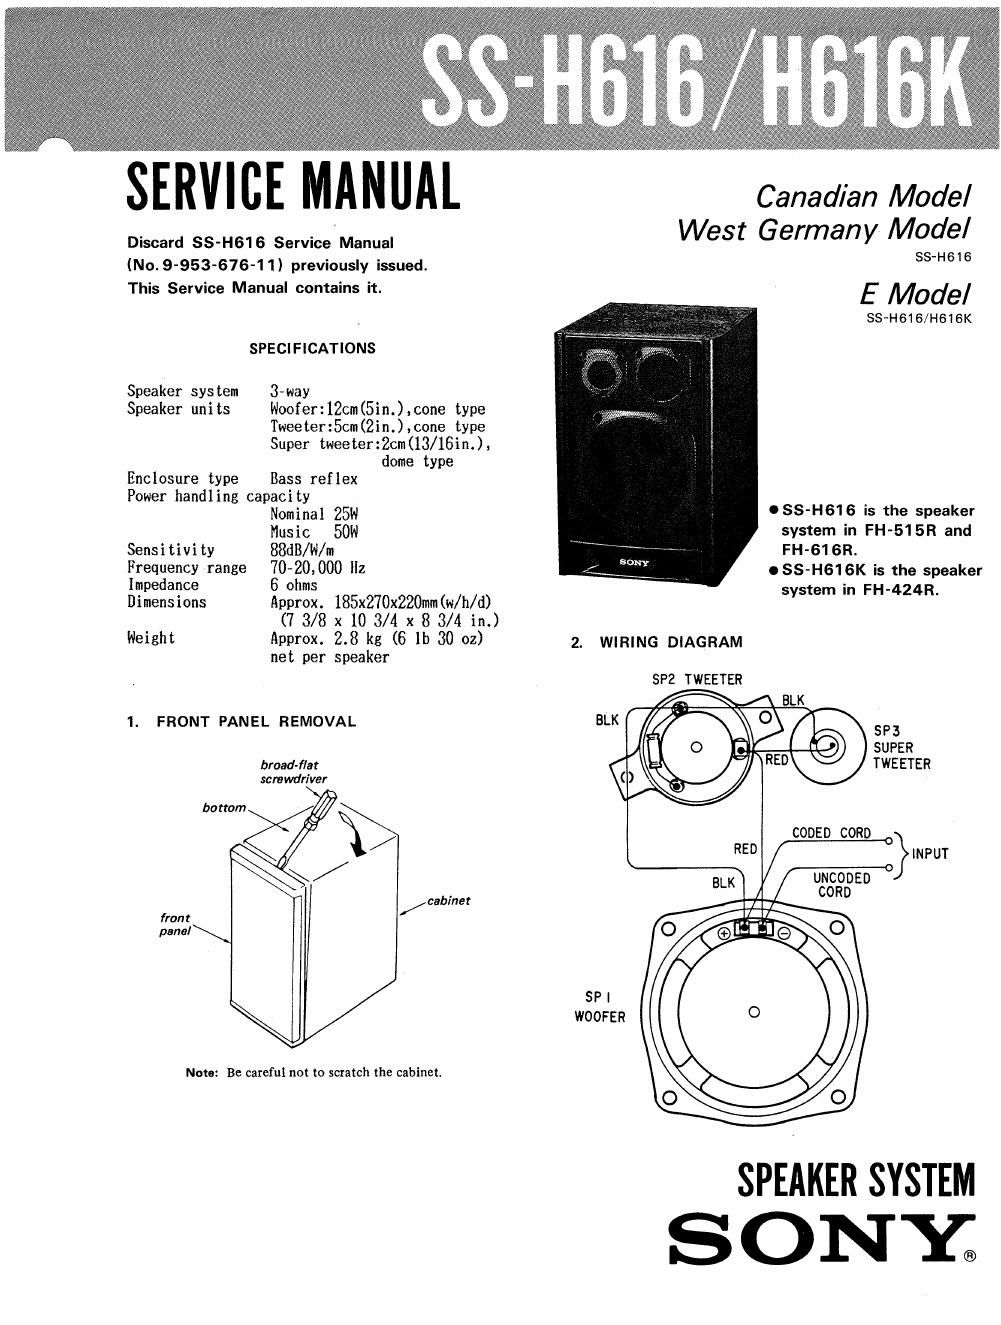 sony ss h 616 k service manual